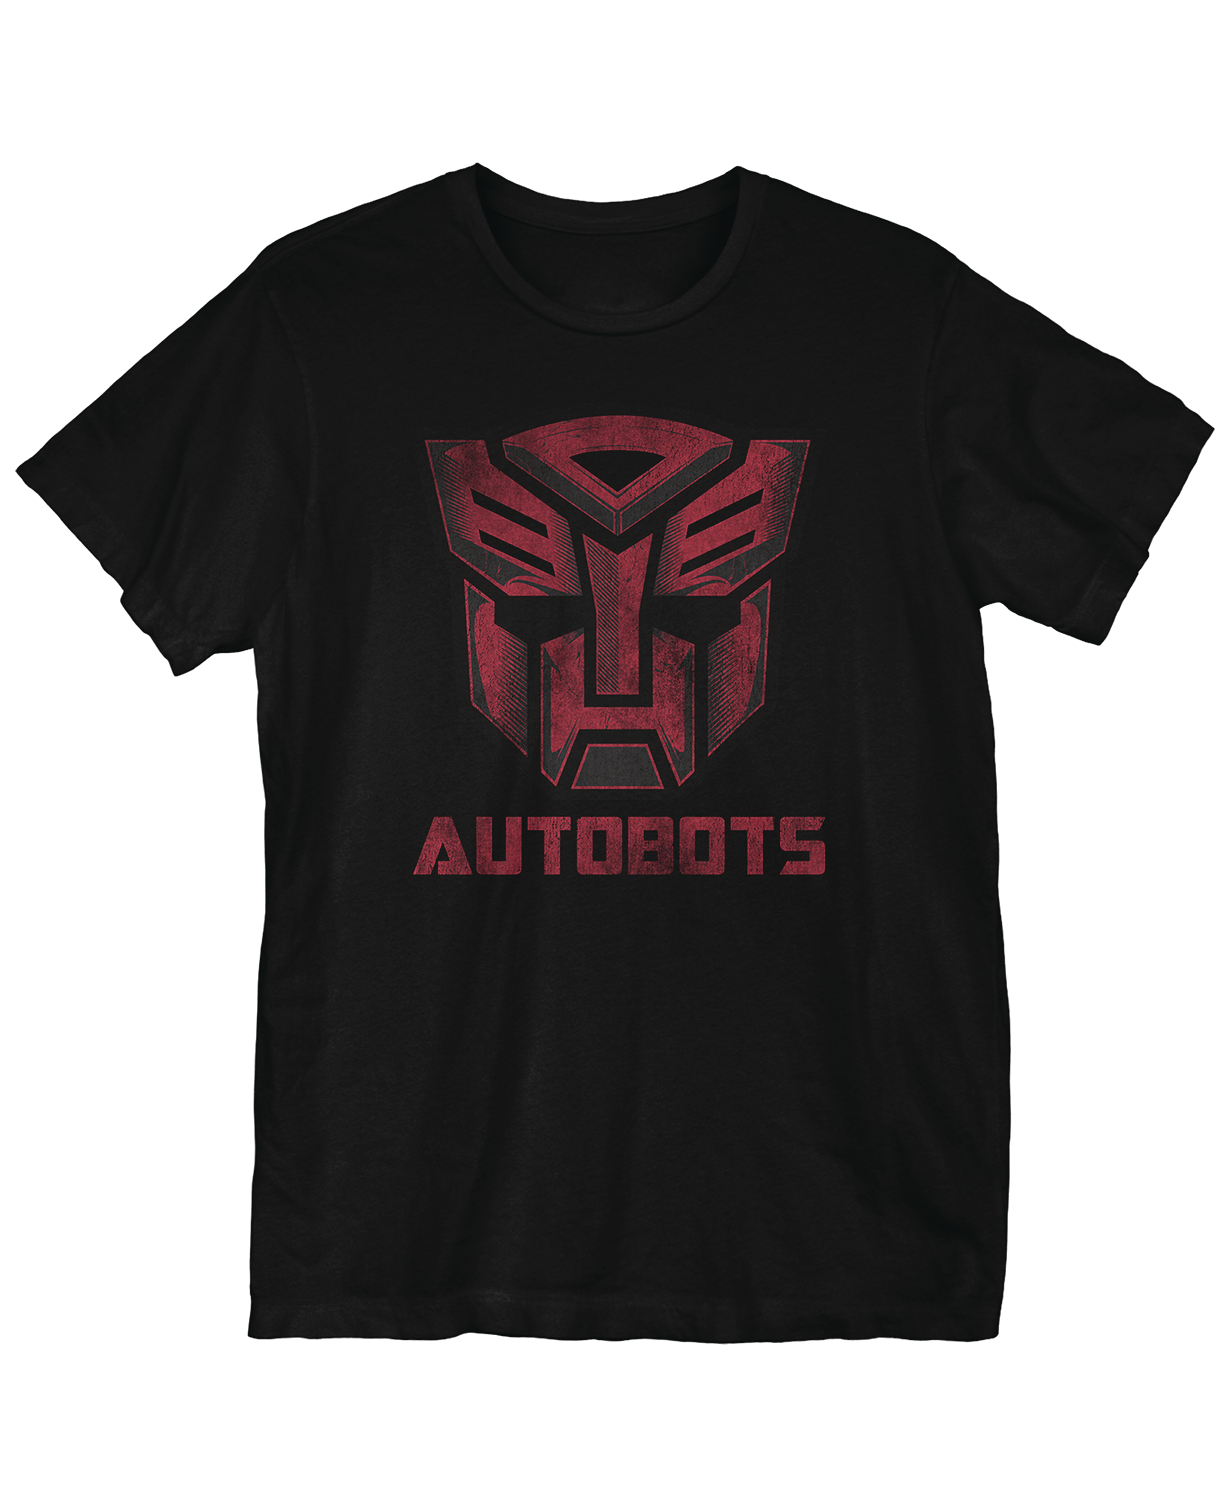 Transformers Bots Meets The Eye T-Shirt Large